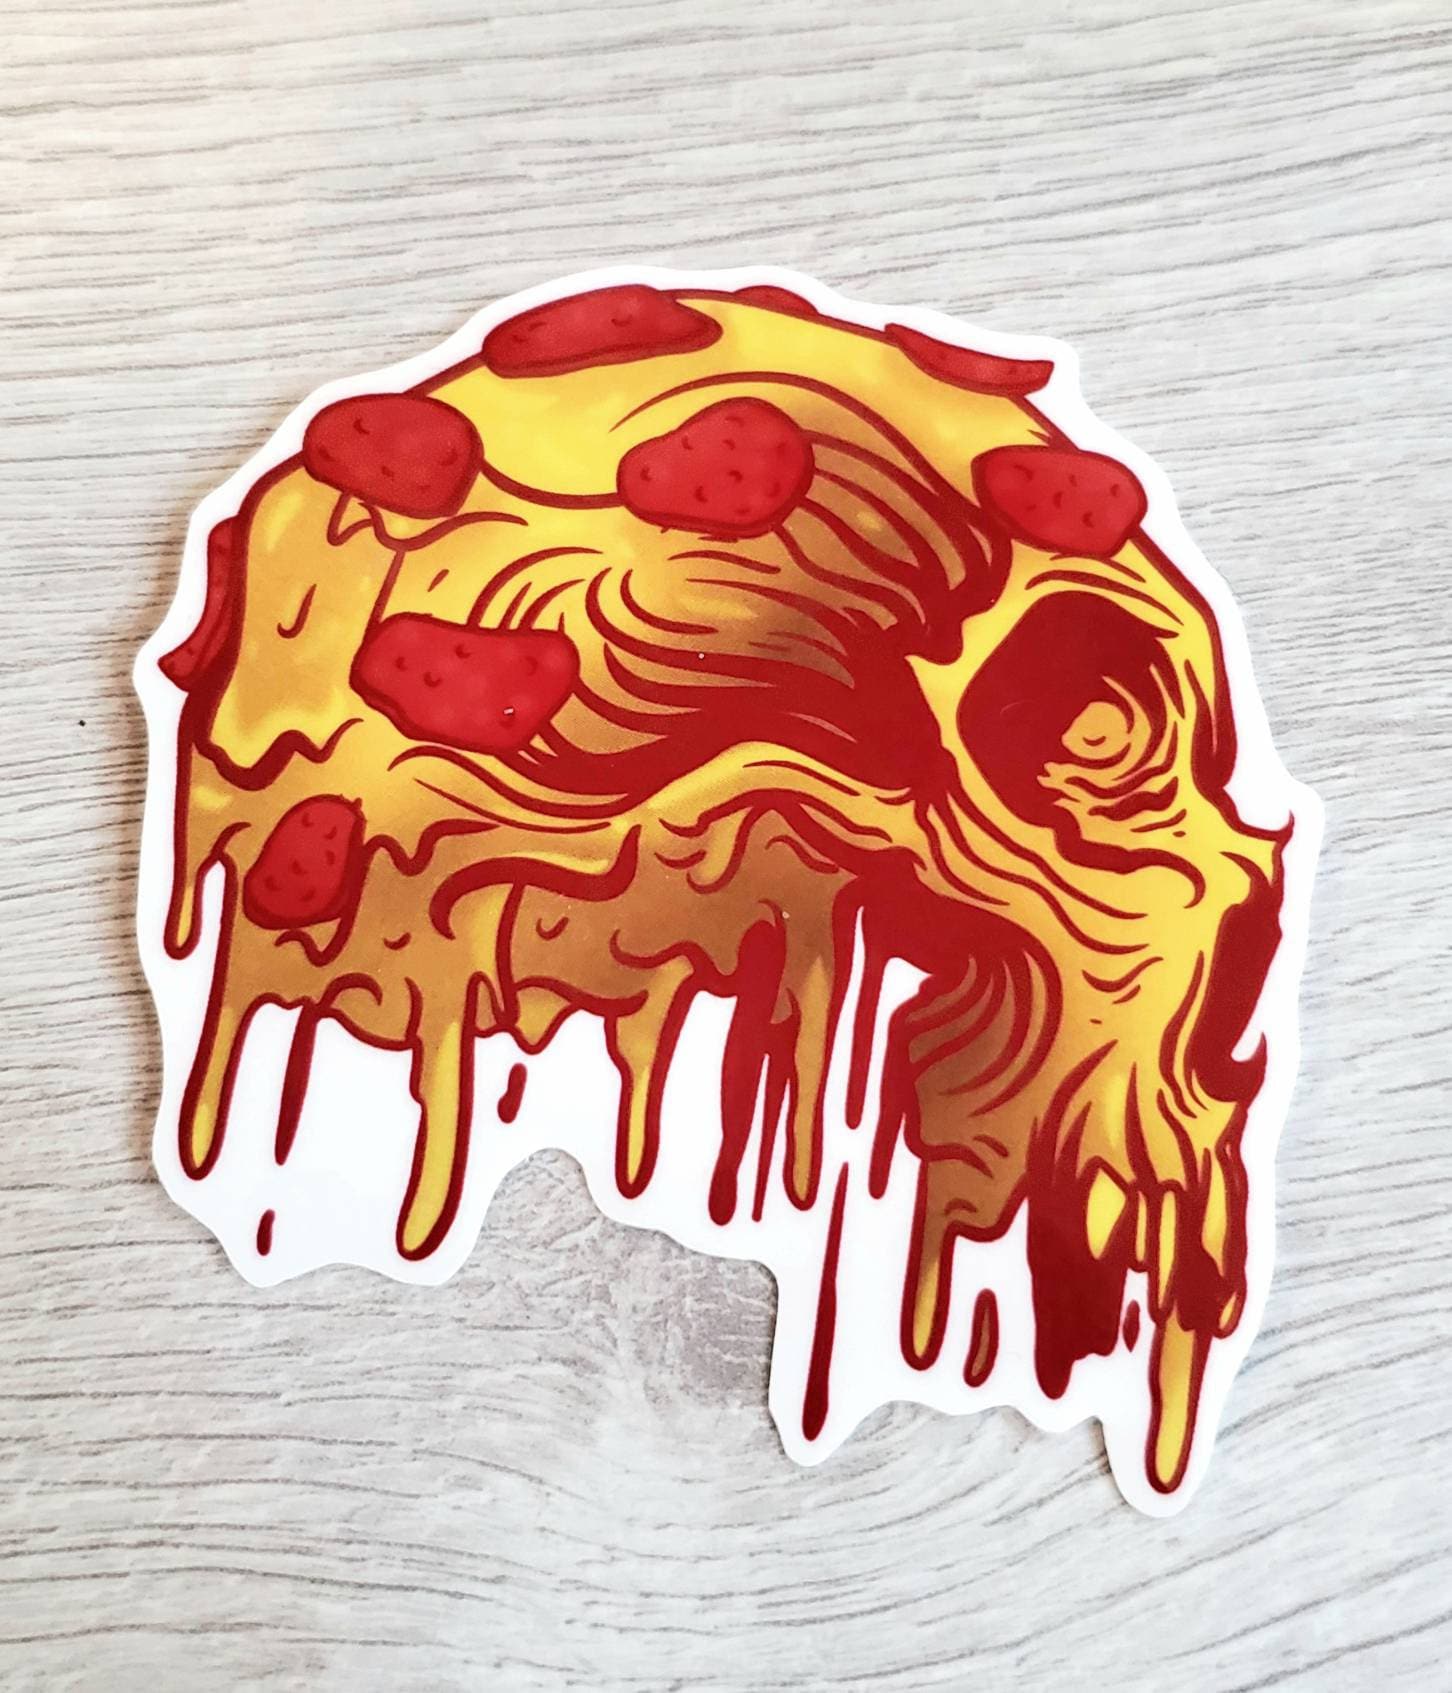 tyktflydende sammenbrud Indeholde Pepperoni Cheese Pizza Skull Free Shipping Pop Art Food Art - Etsy